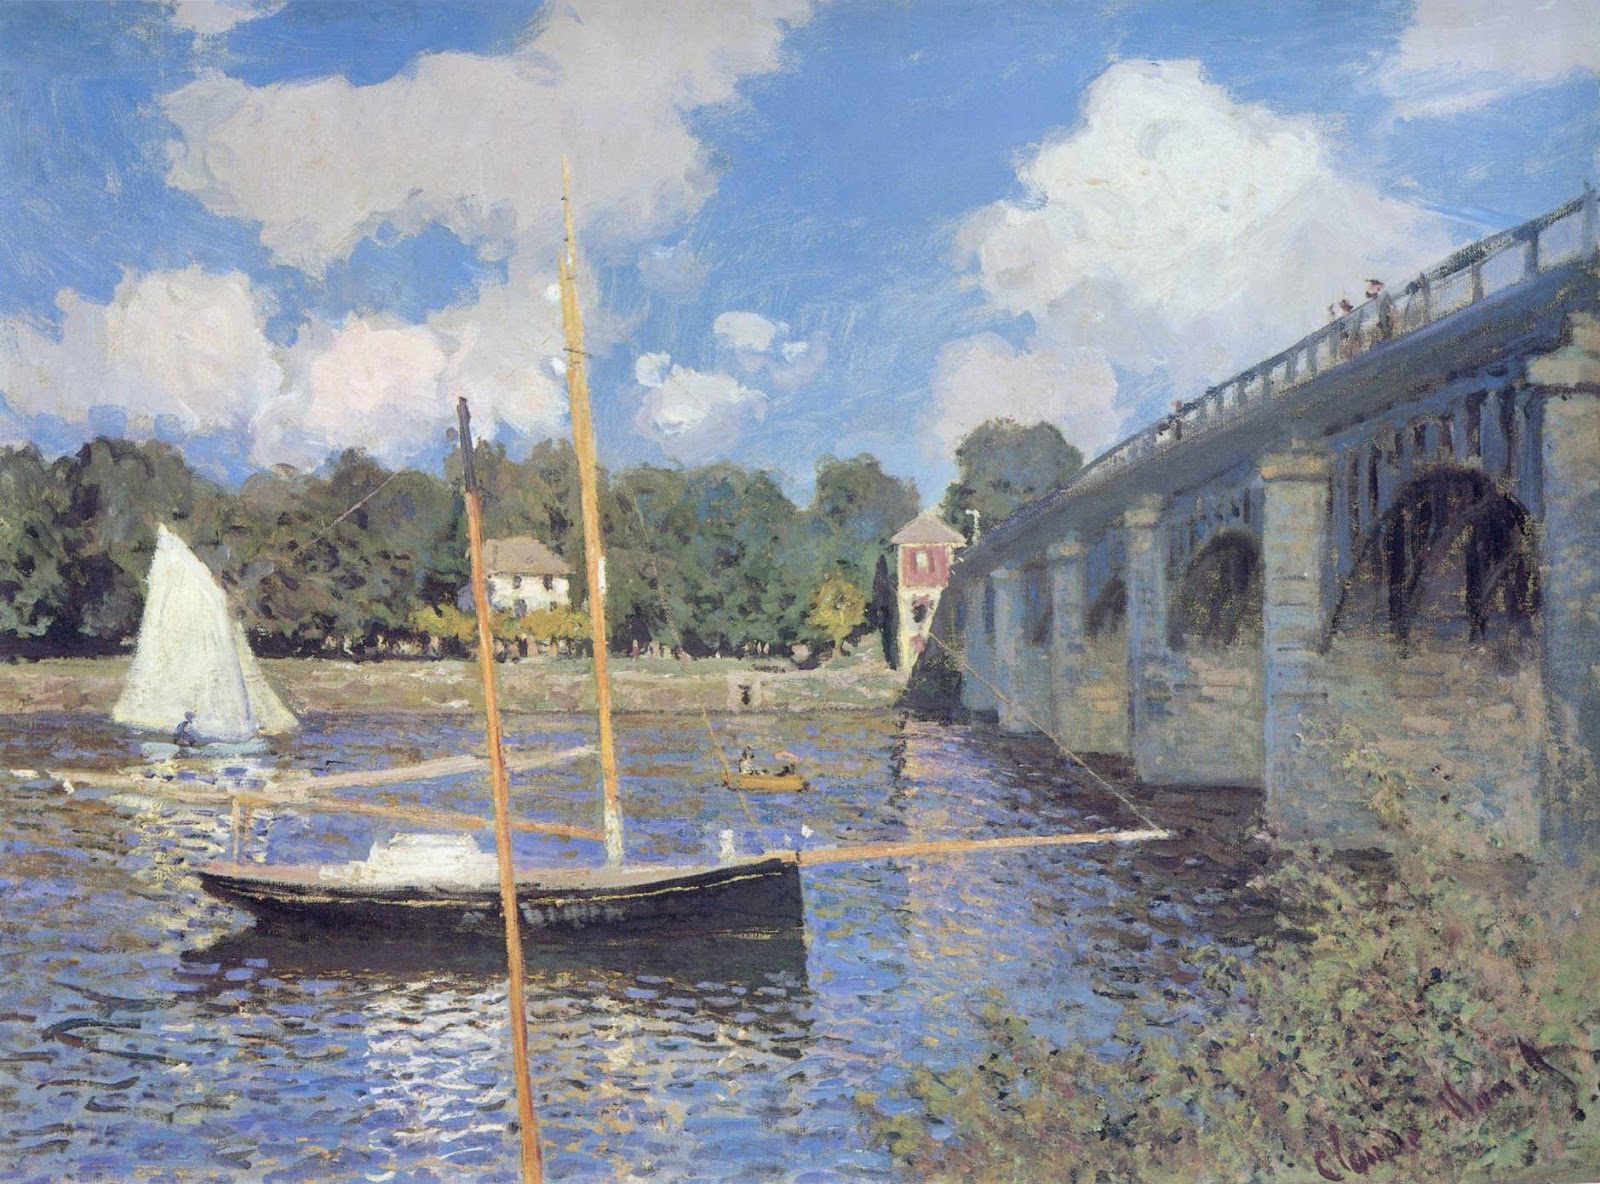 Claude+Monet-1840-1926 (150).jpg